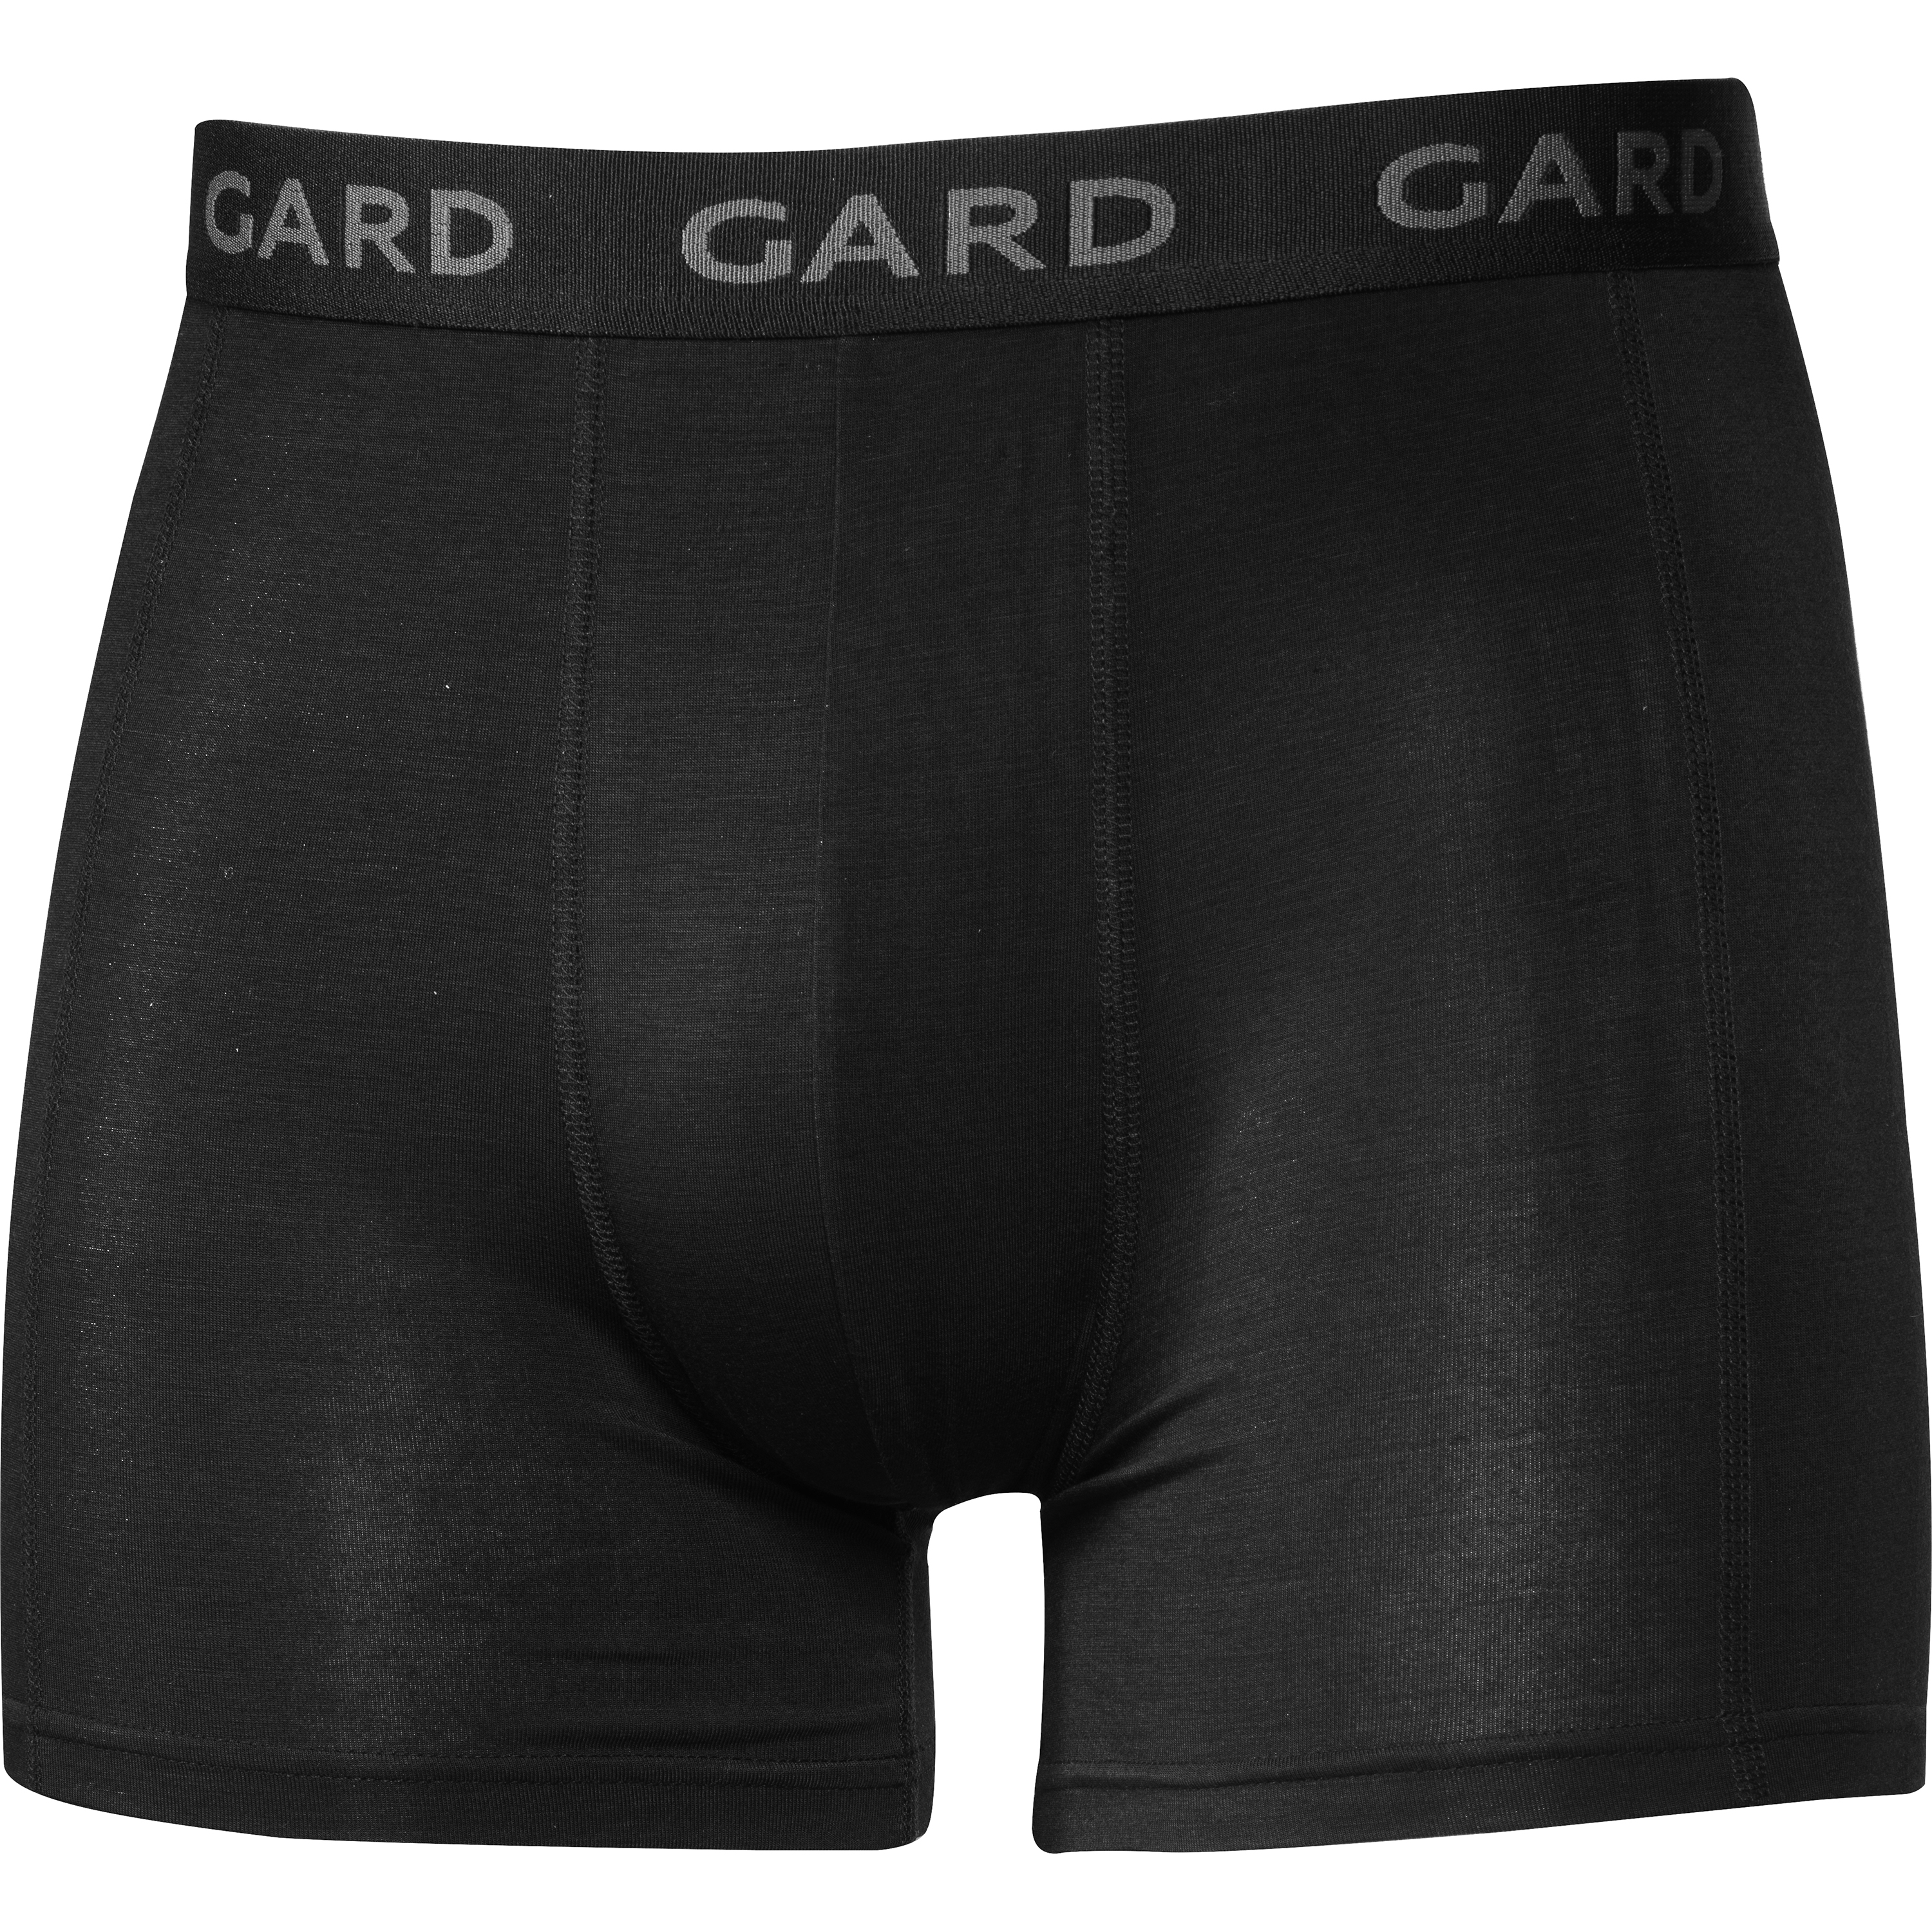 Gard Workwear